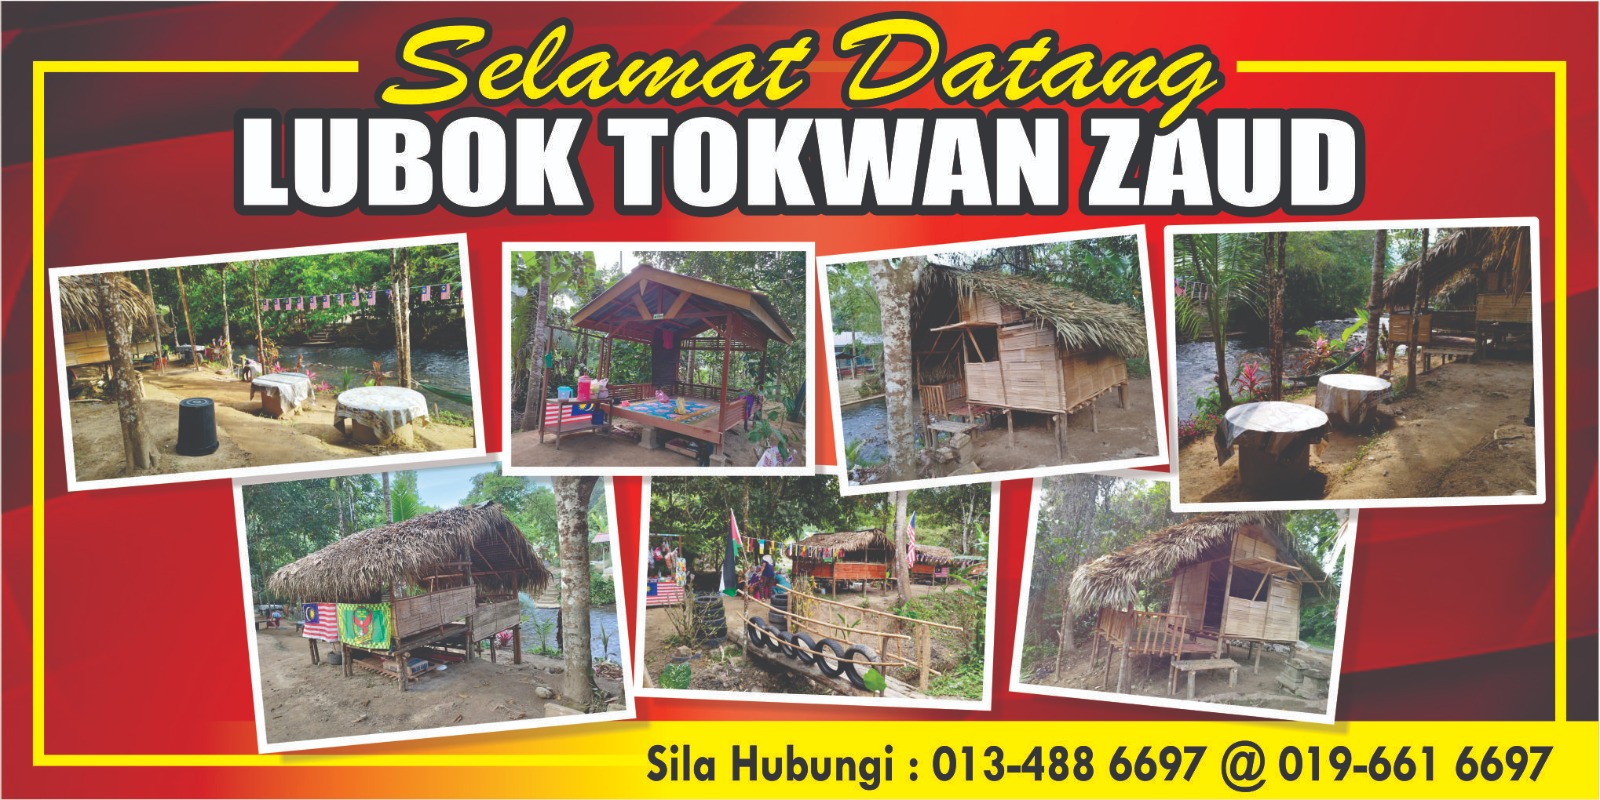 Campsite Lubok Tokwan Zaud